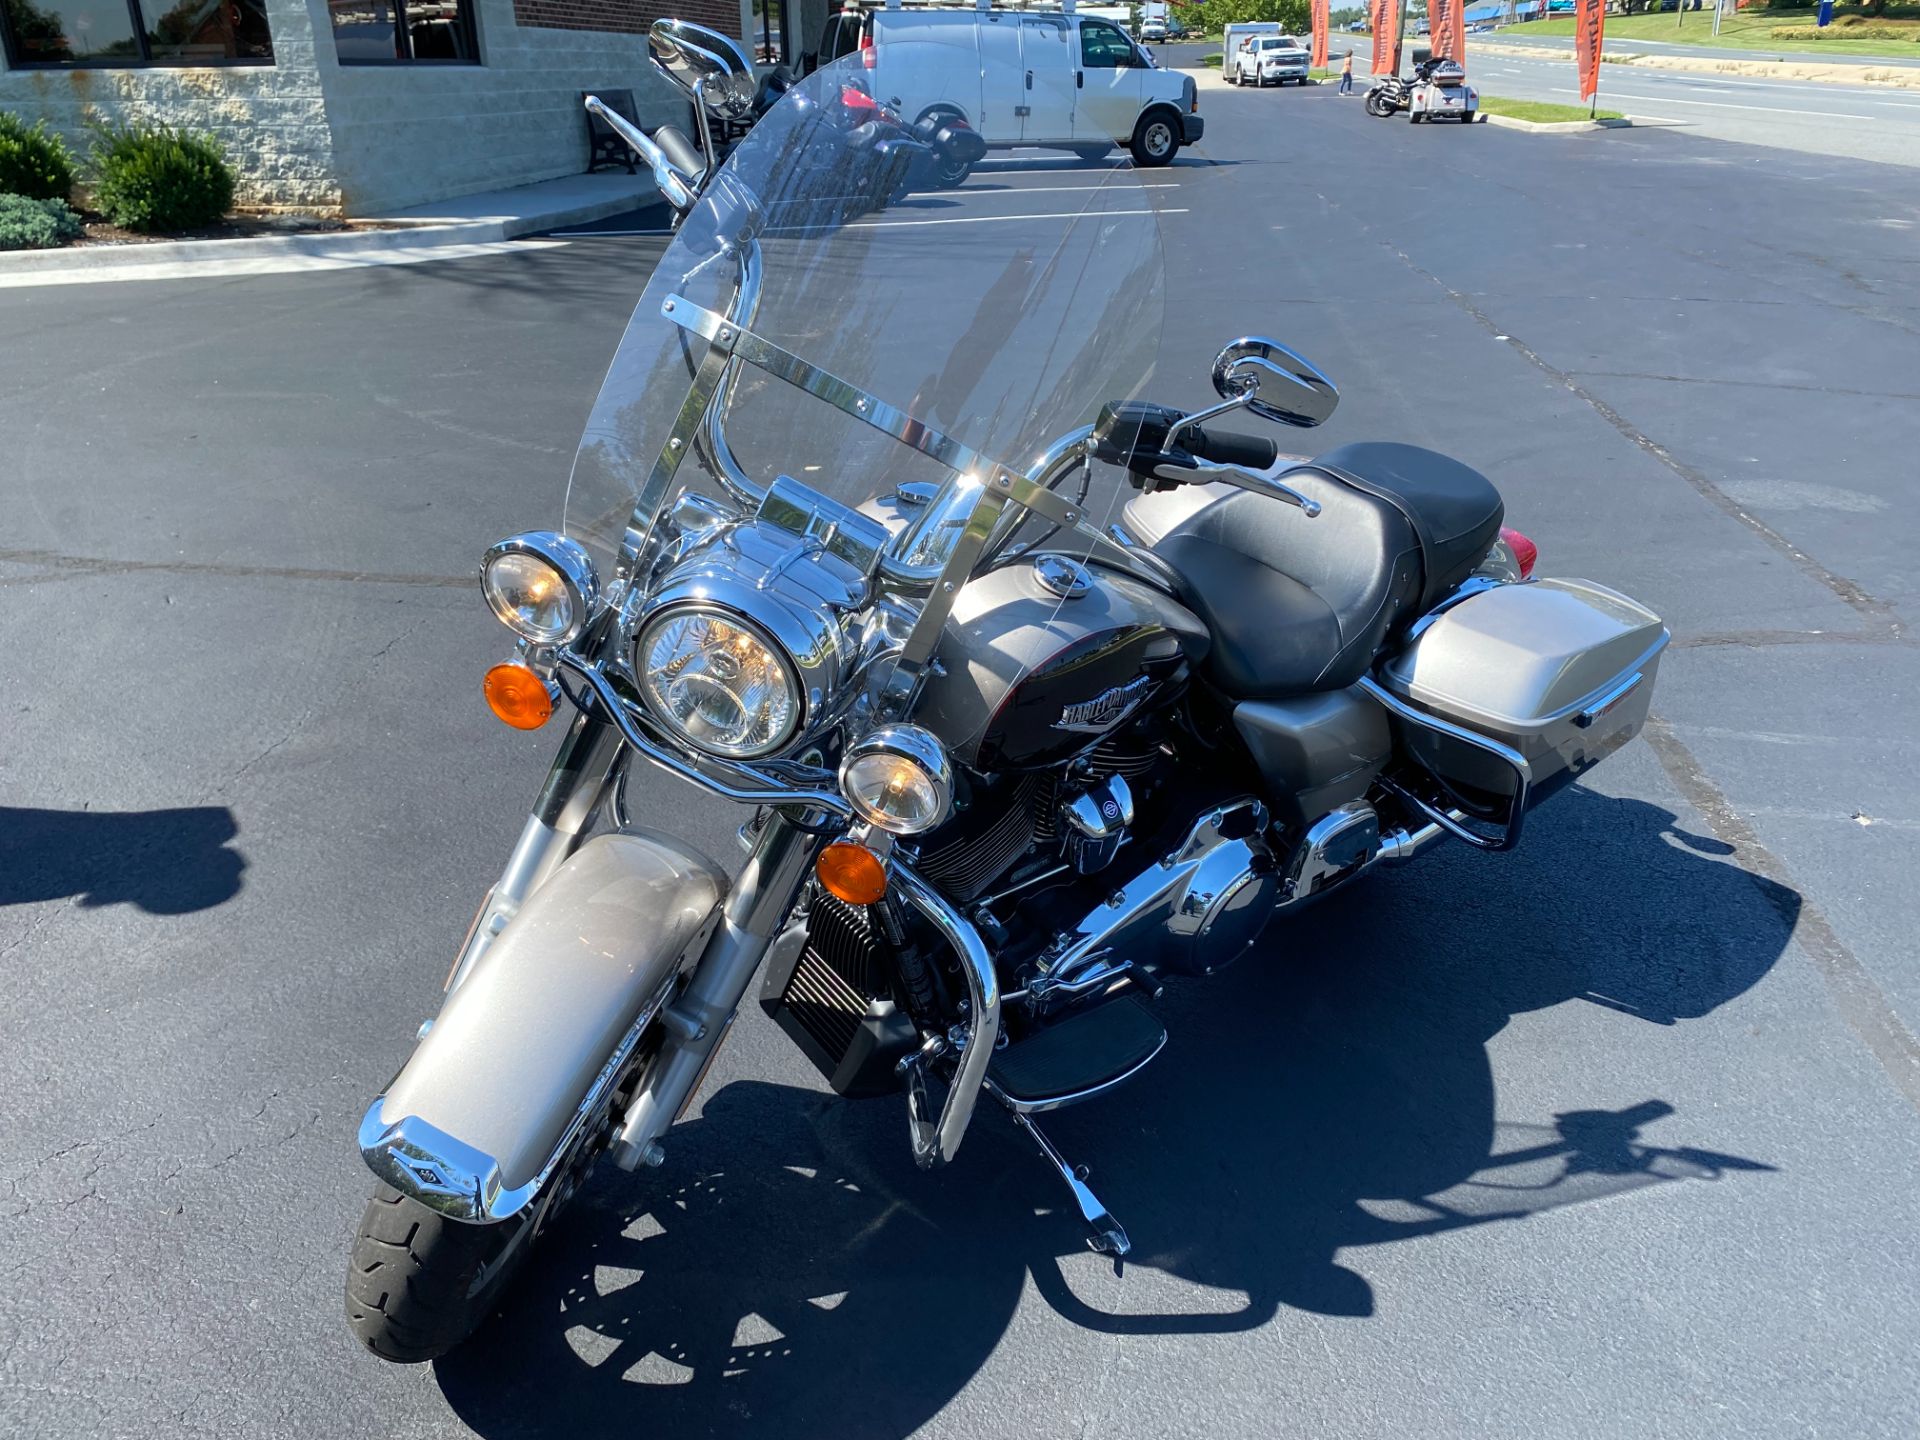 2018 Harley-Davidson Road King® in Lynchburg, Virginia - Photo 4